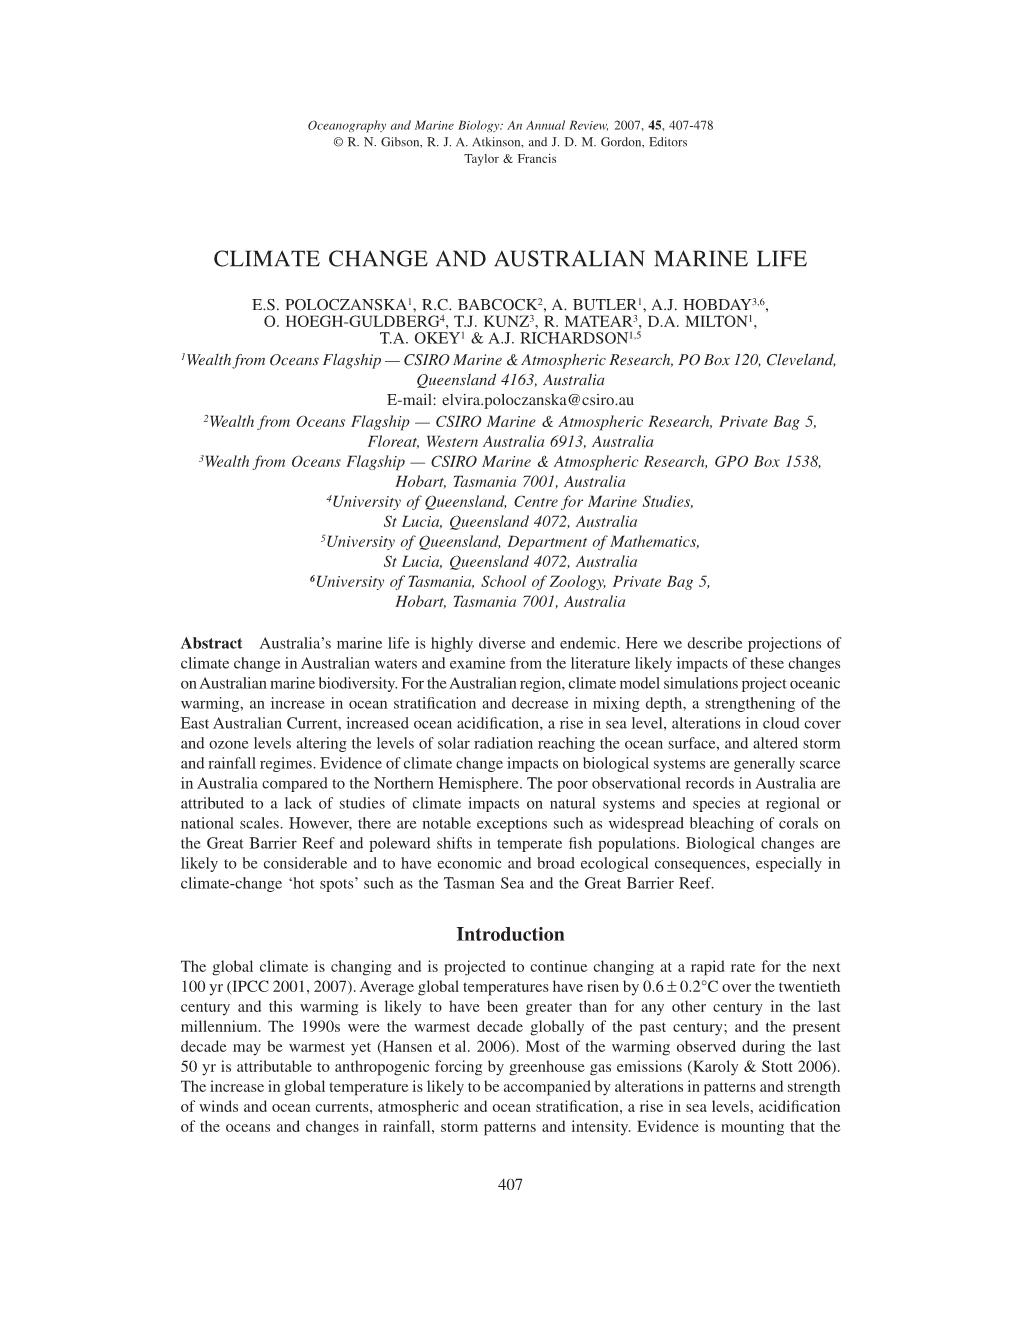 Climate Change and Australian Marine Life